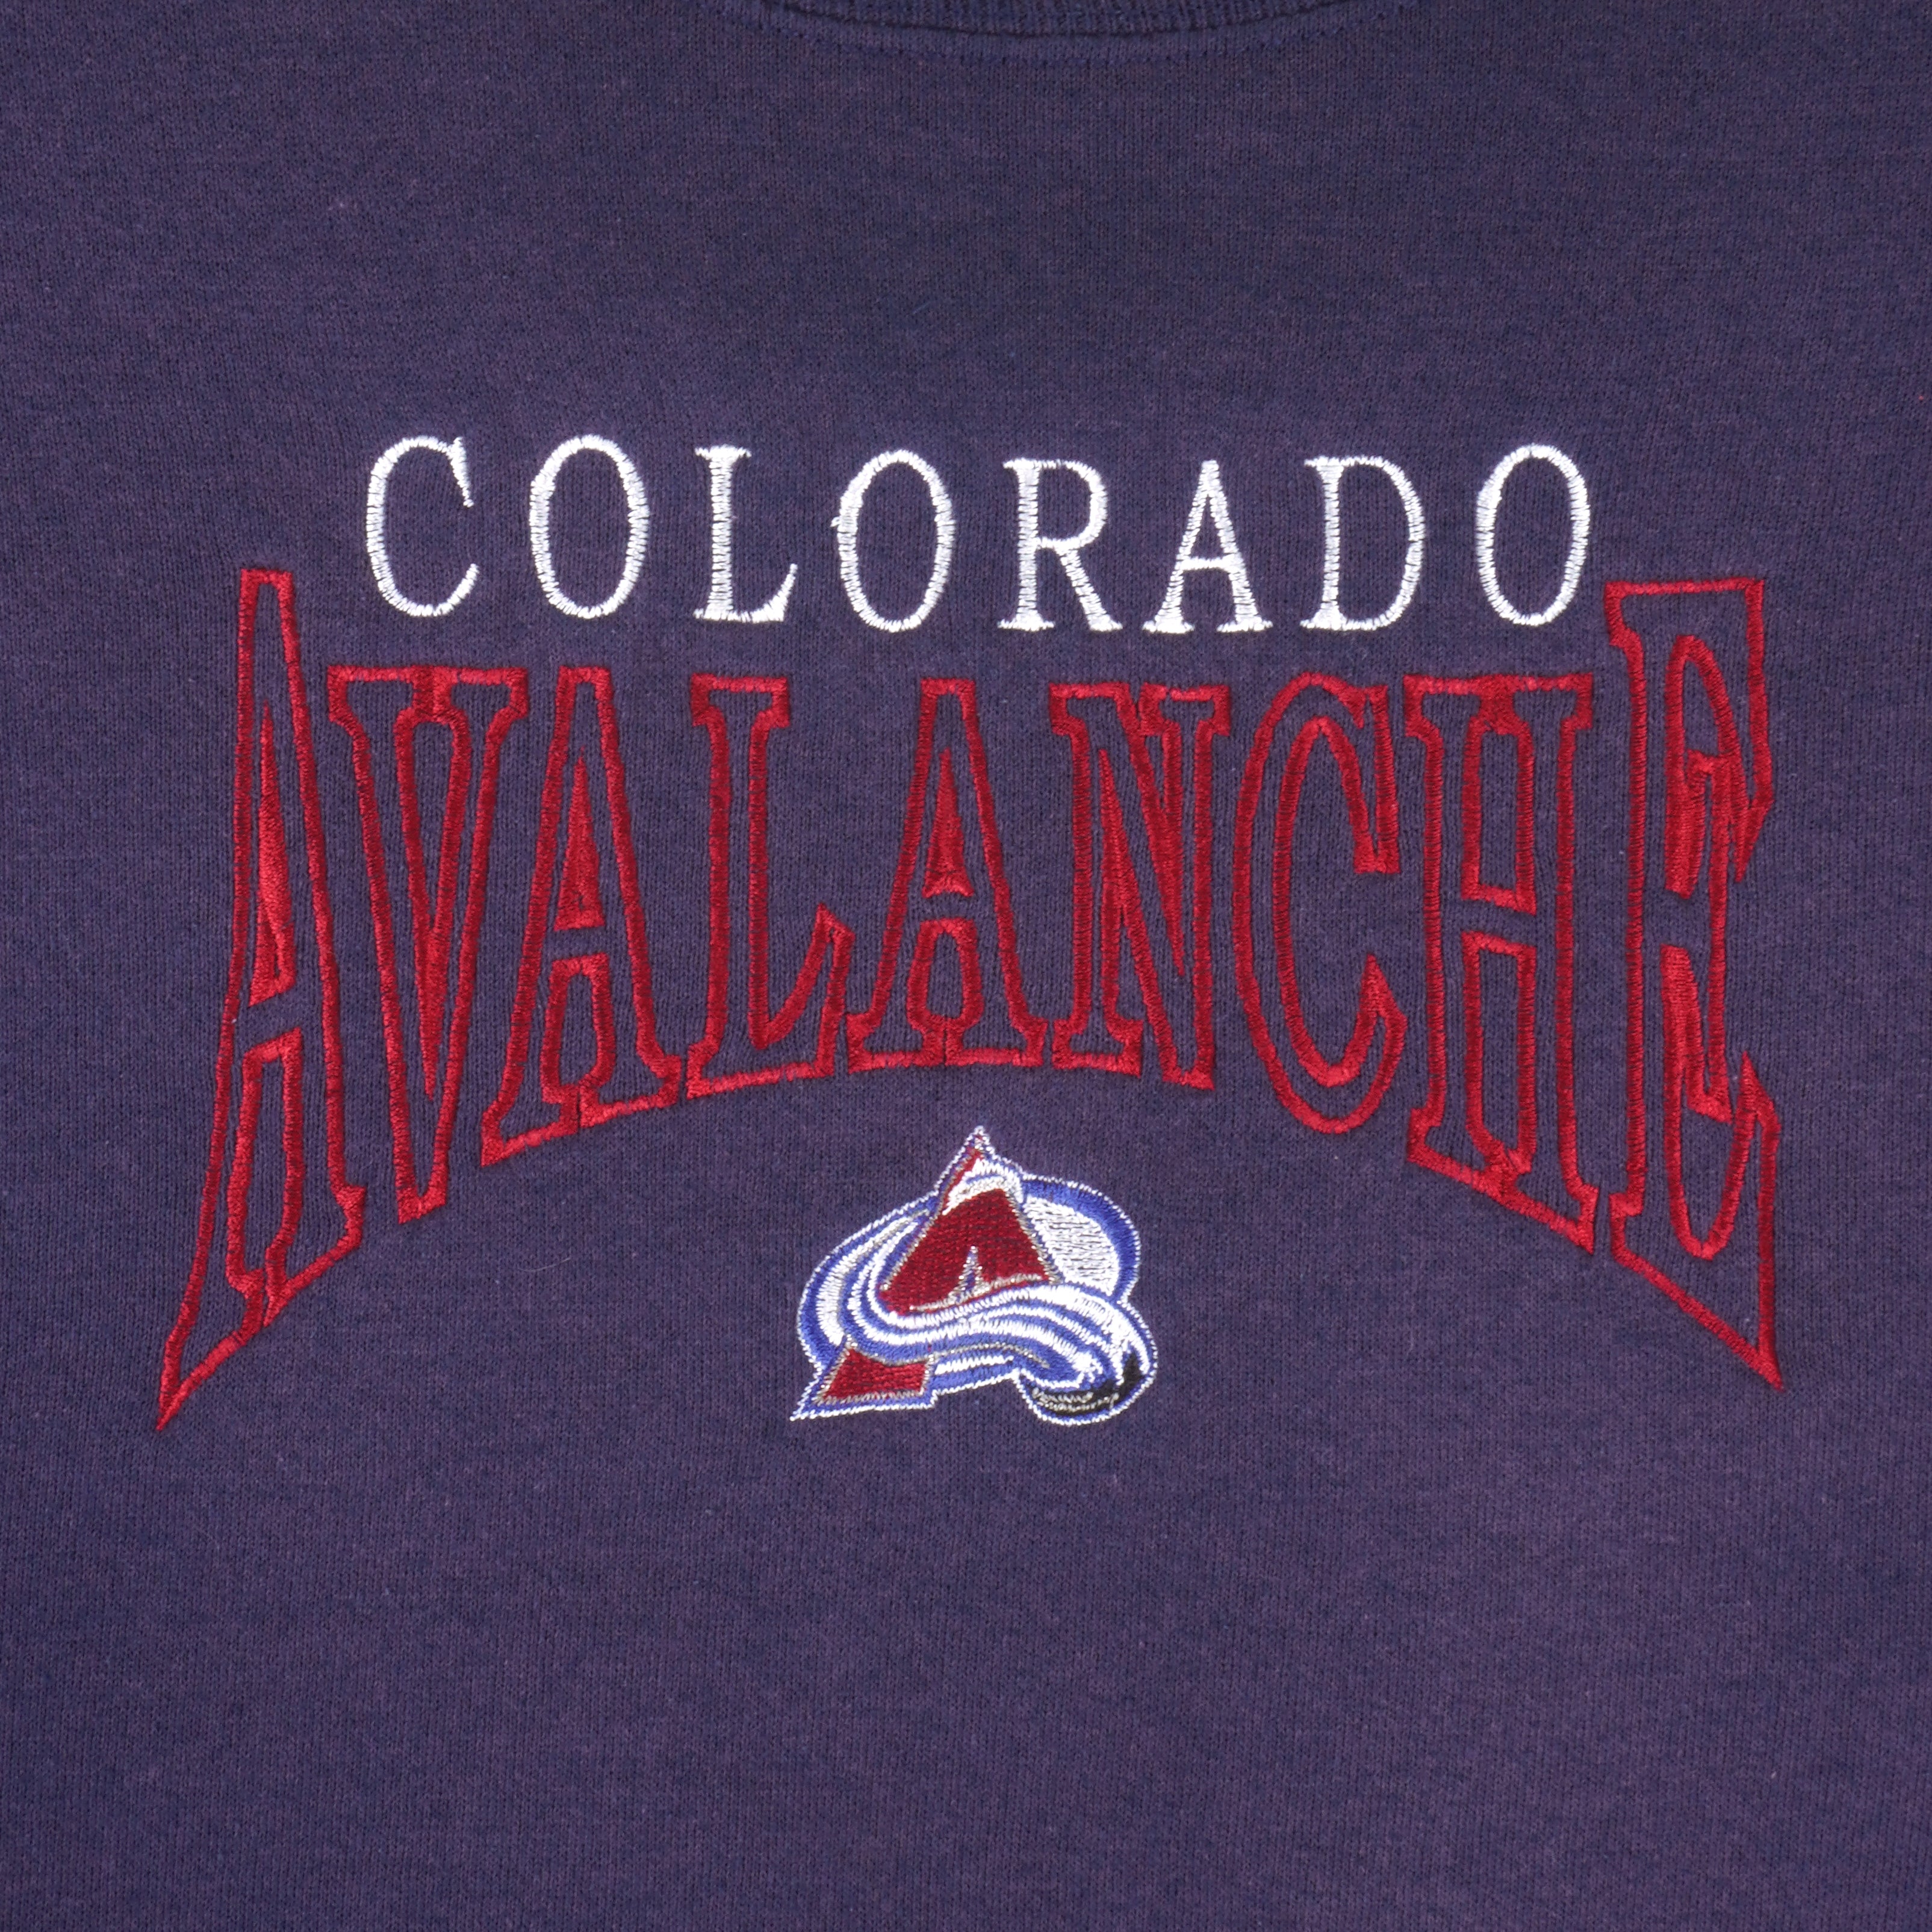 Colorado Avalanche Jerseys & Teamwear, NHL Merch